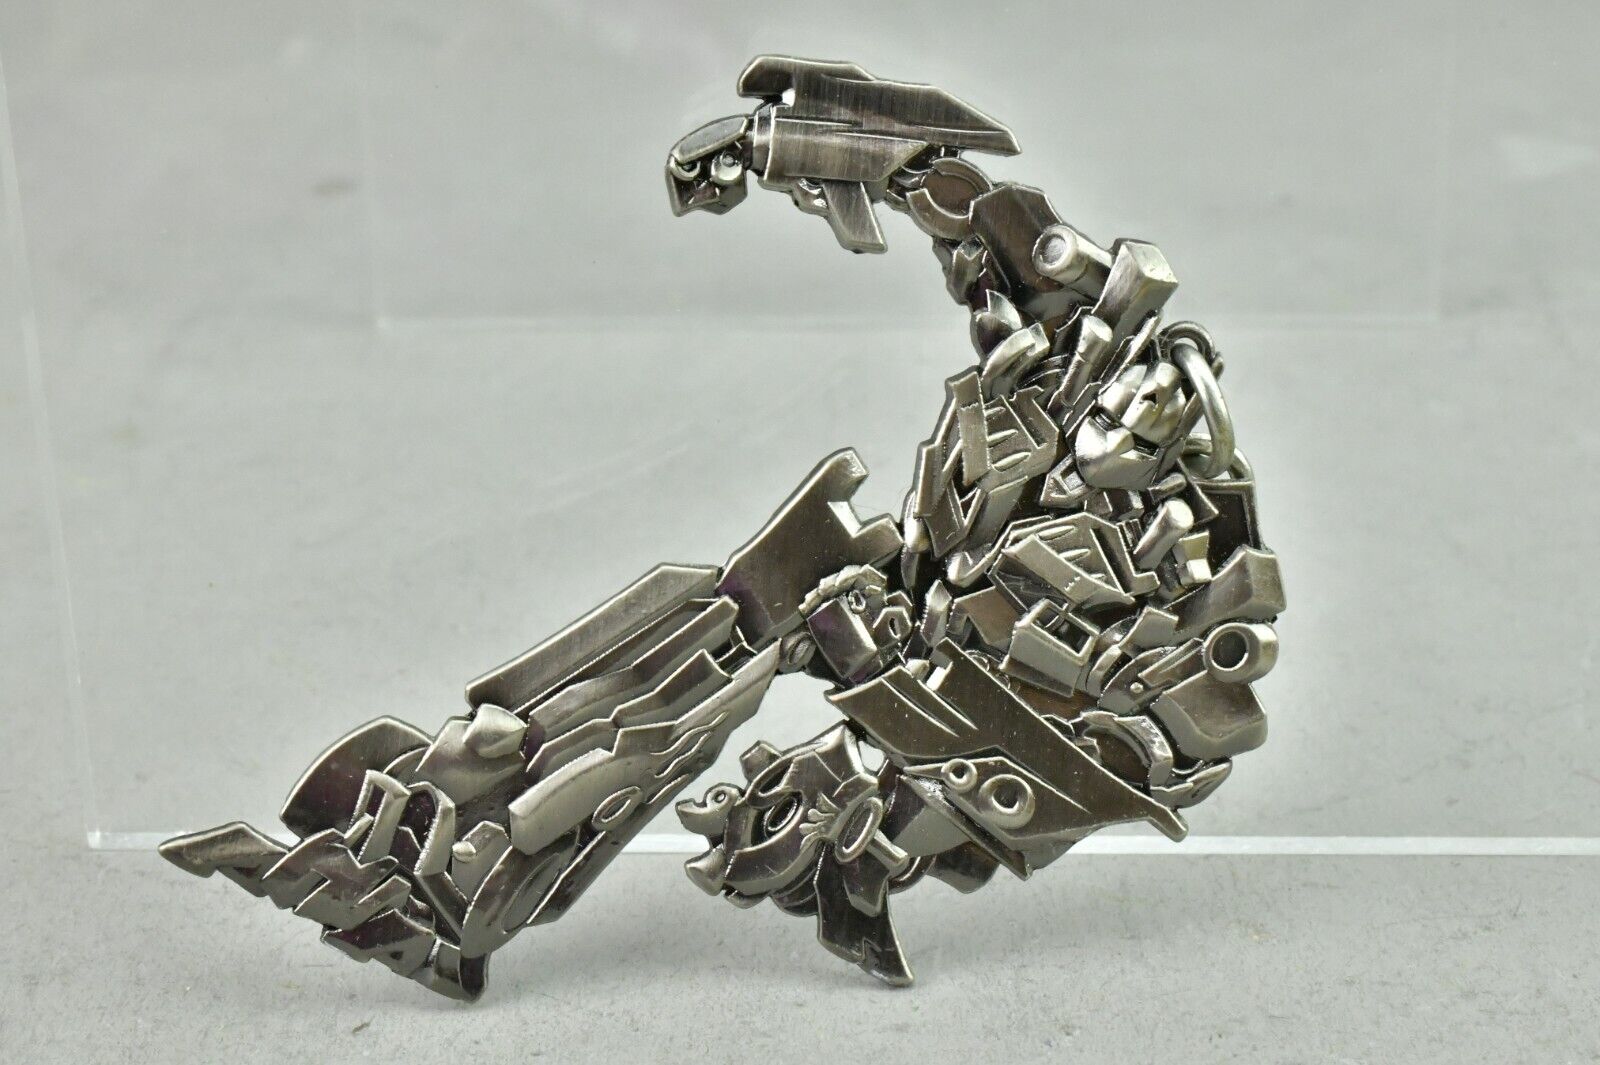 Magnificent Transformers Universal Studio Optimus Prime Keychain Pin 2013 DW Metal on eBay